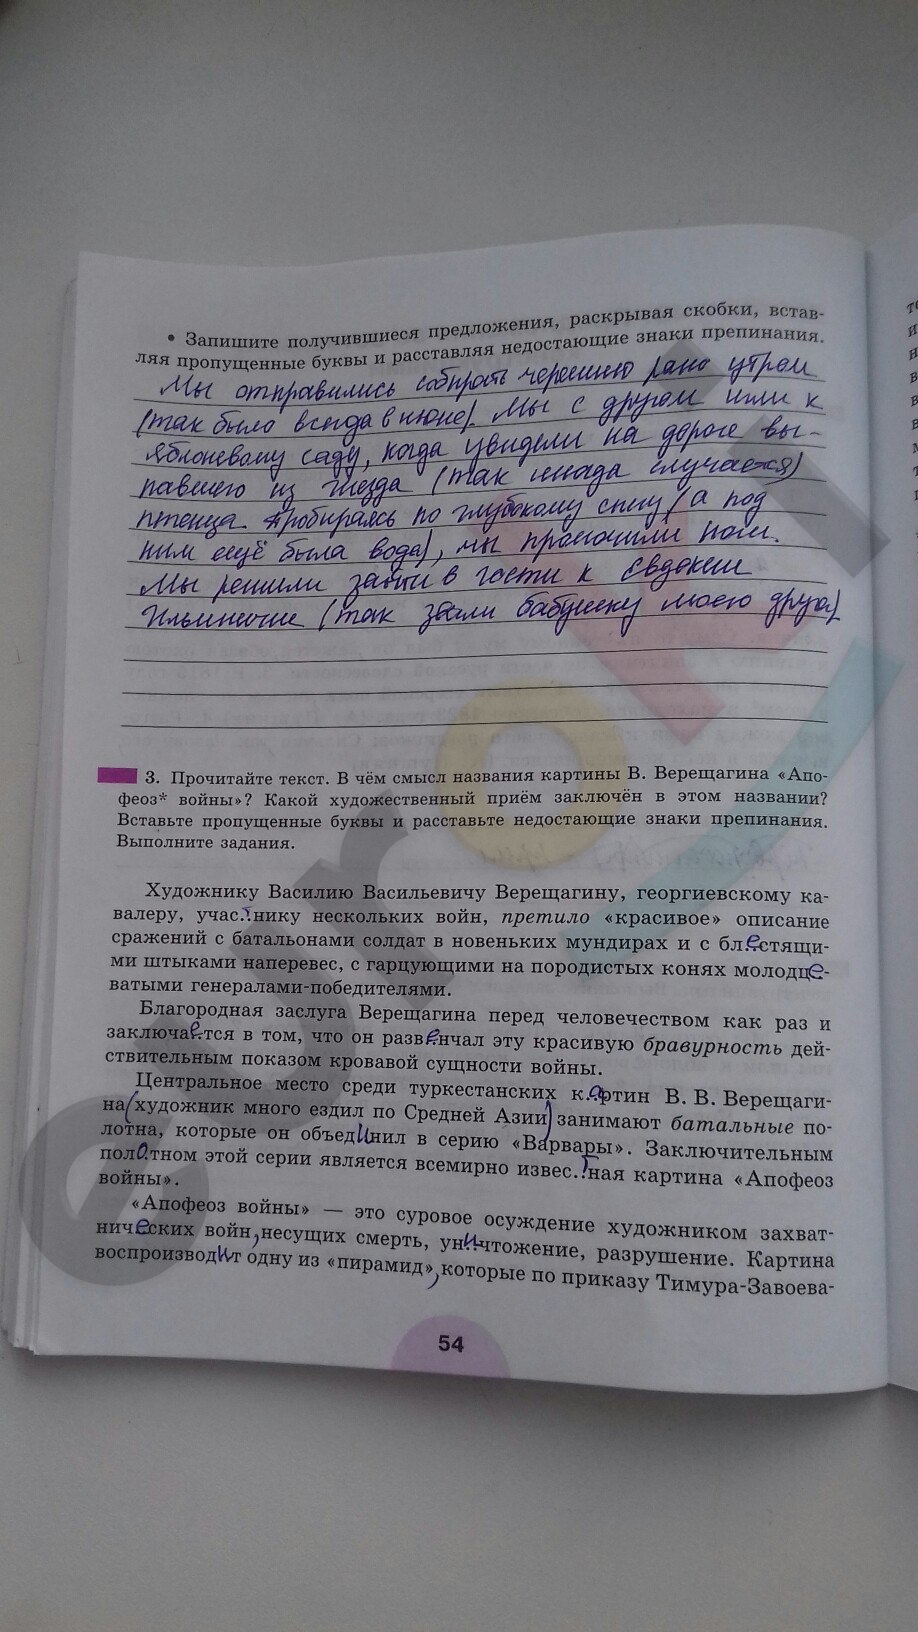 гдз 8 класс рабочая тетрадь часть 2 страница 54 русский язык Рыбченкова, Александрова